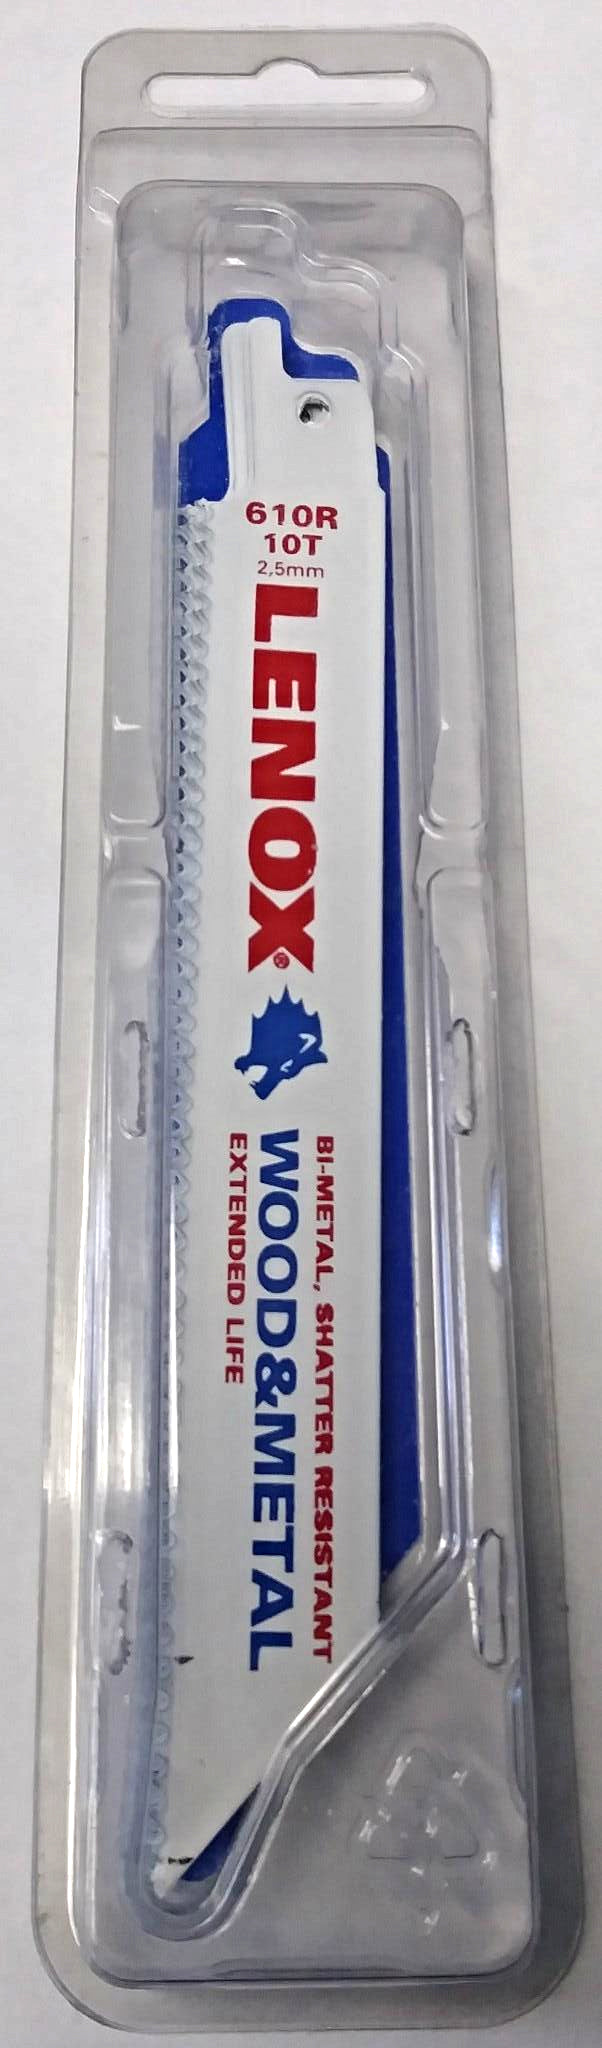 Lenox 20562-610R 6" x 10T Wood & Metal Reciprocating Saw Blades 5 Pack USA